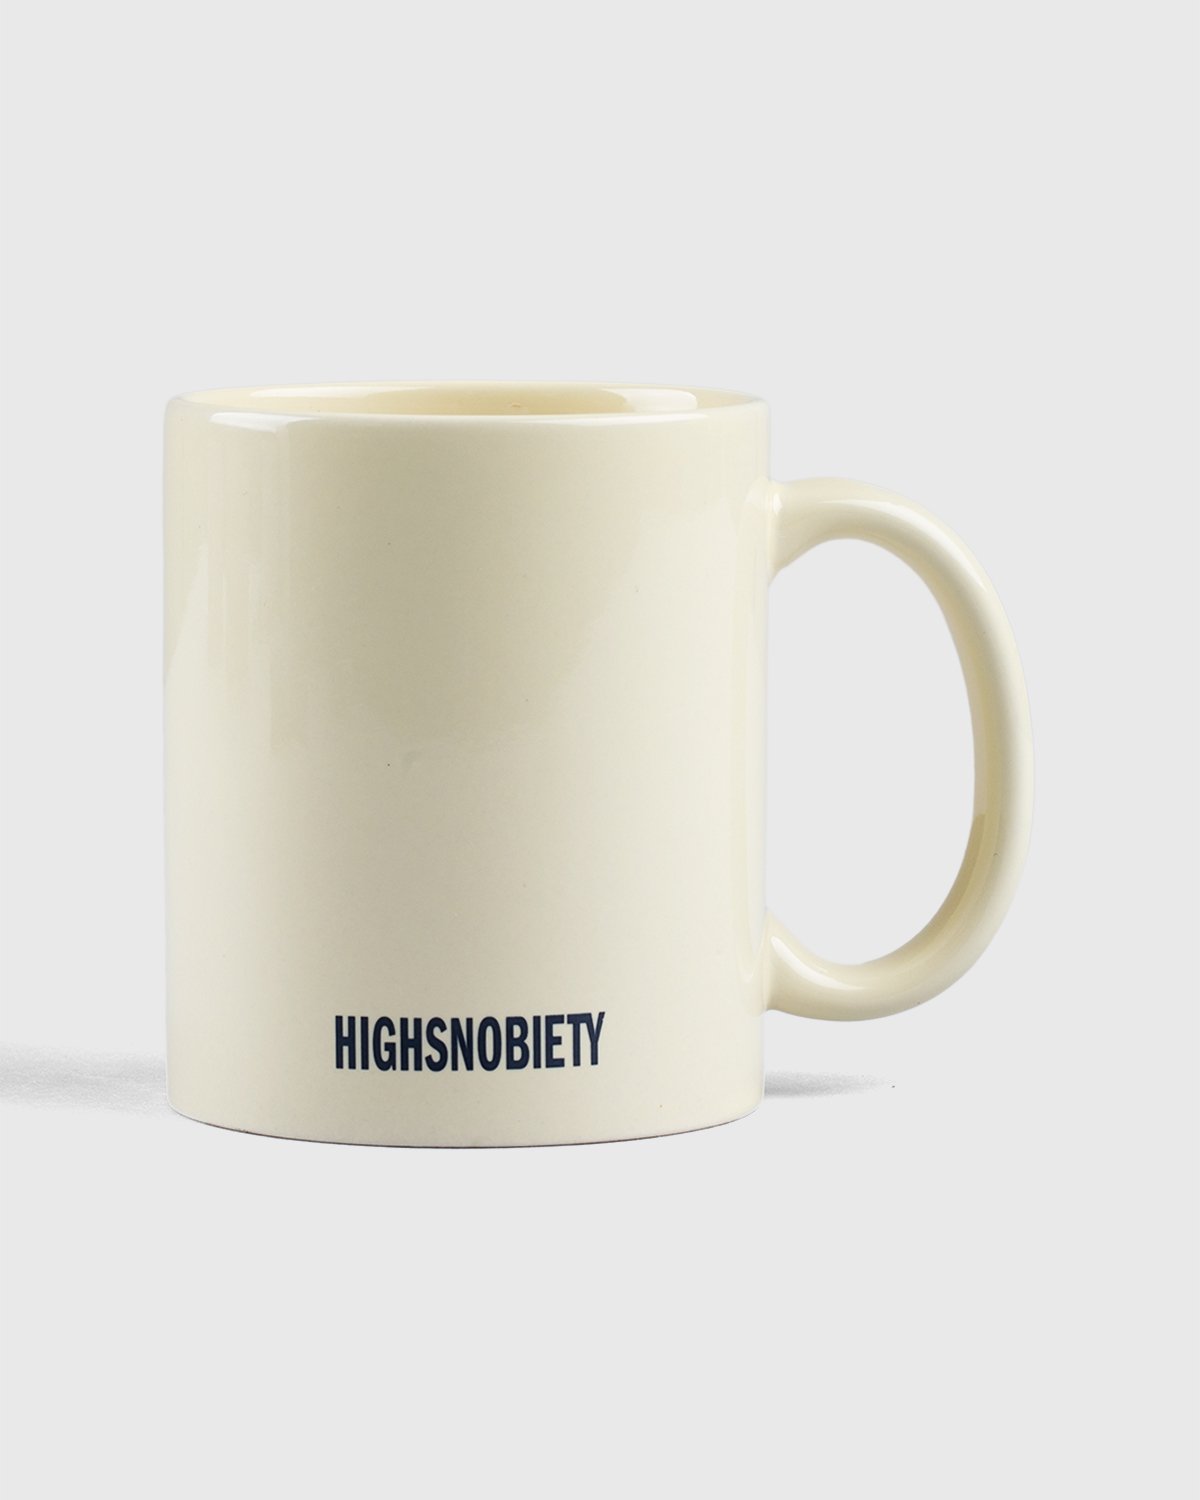 Highsnobiety - Coffee Mug - Lifestyle - White - Image 2